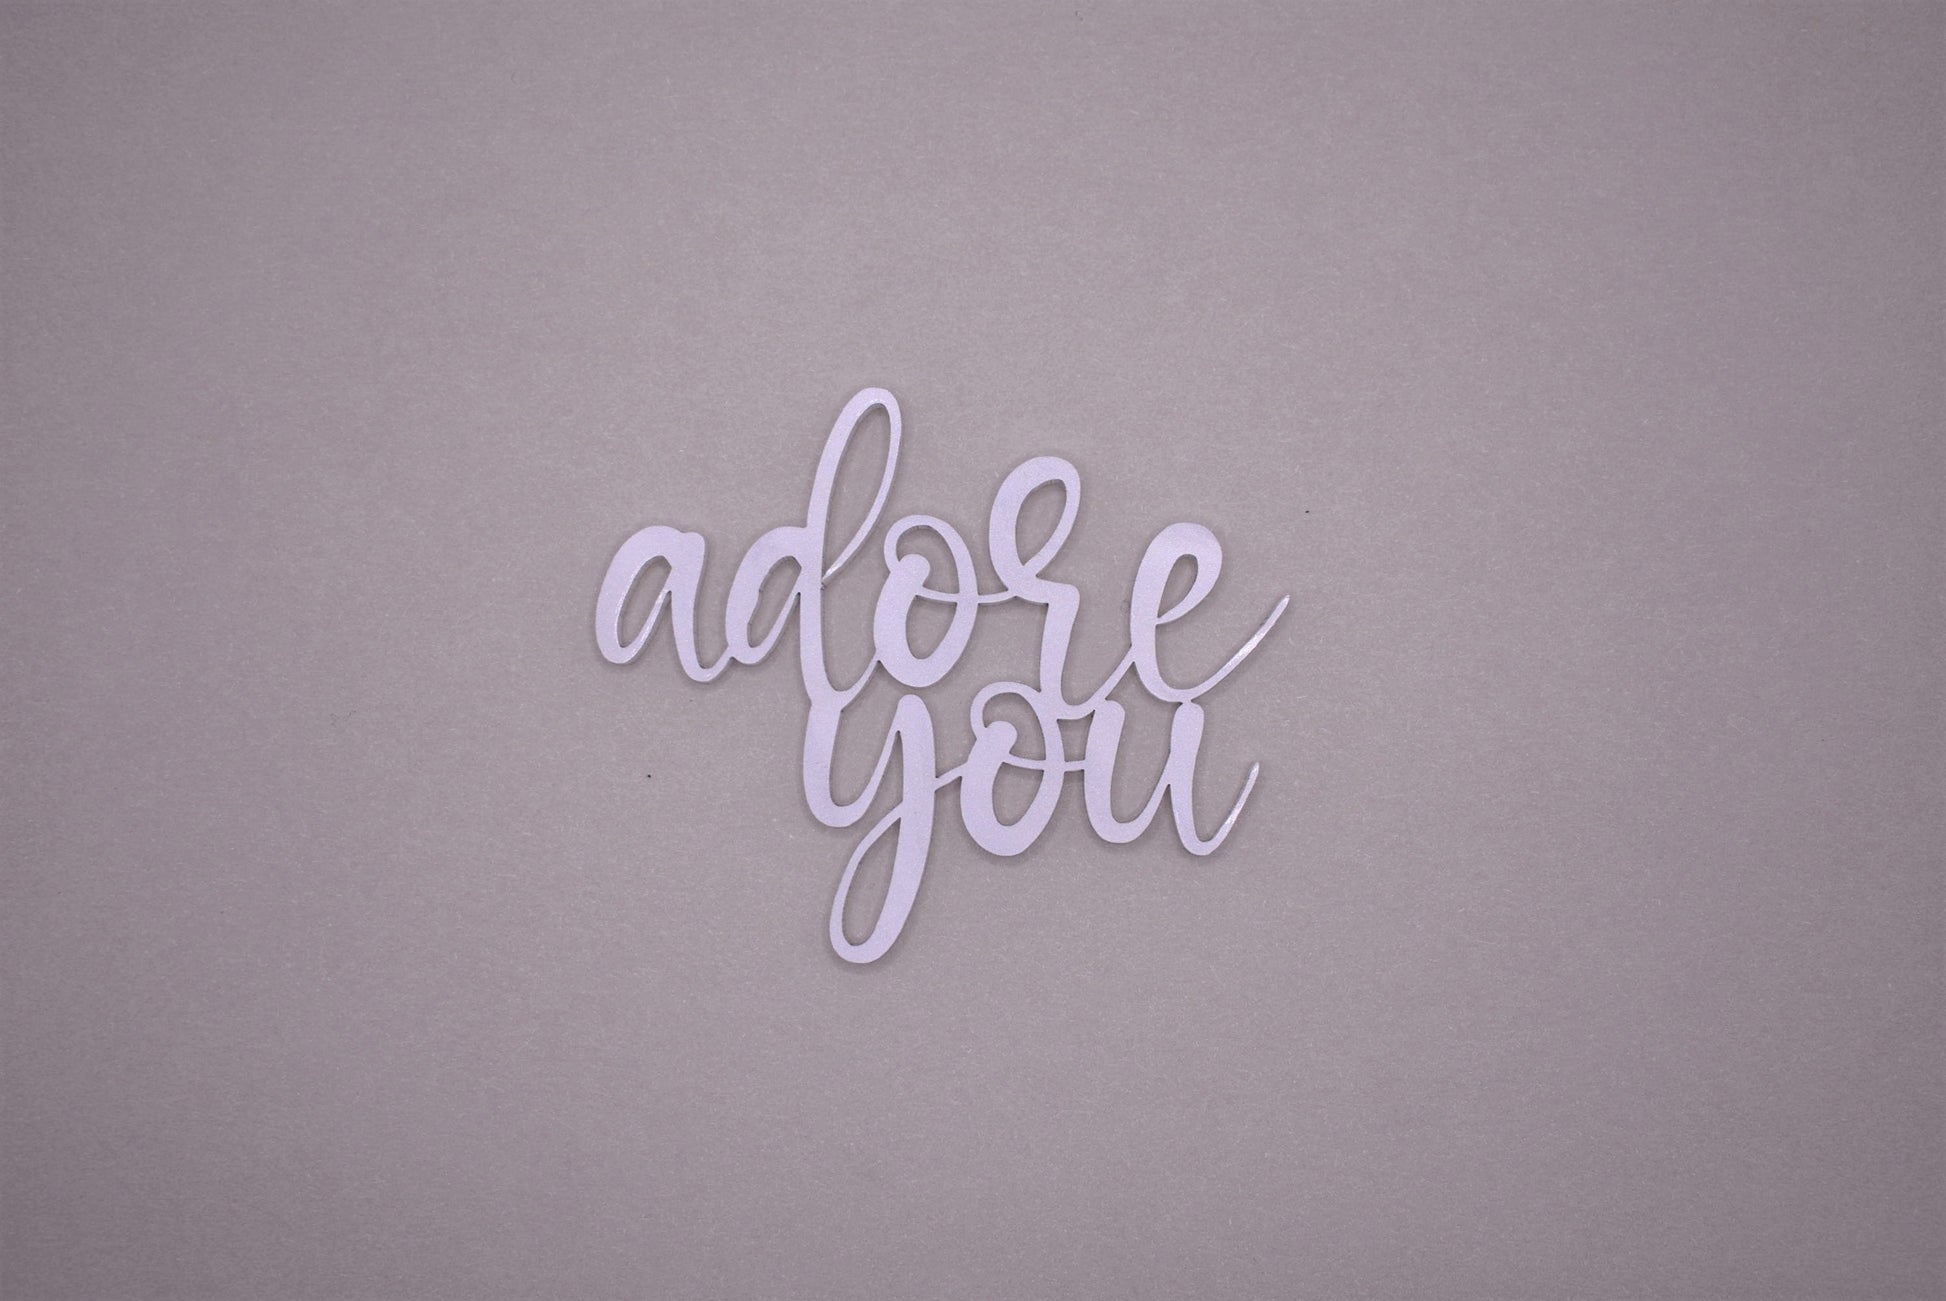 Adore you - Creative Designs By Kari